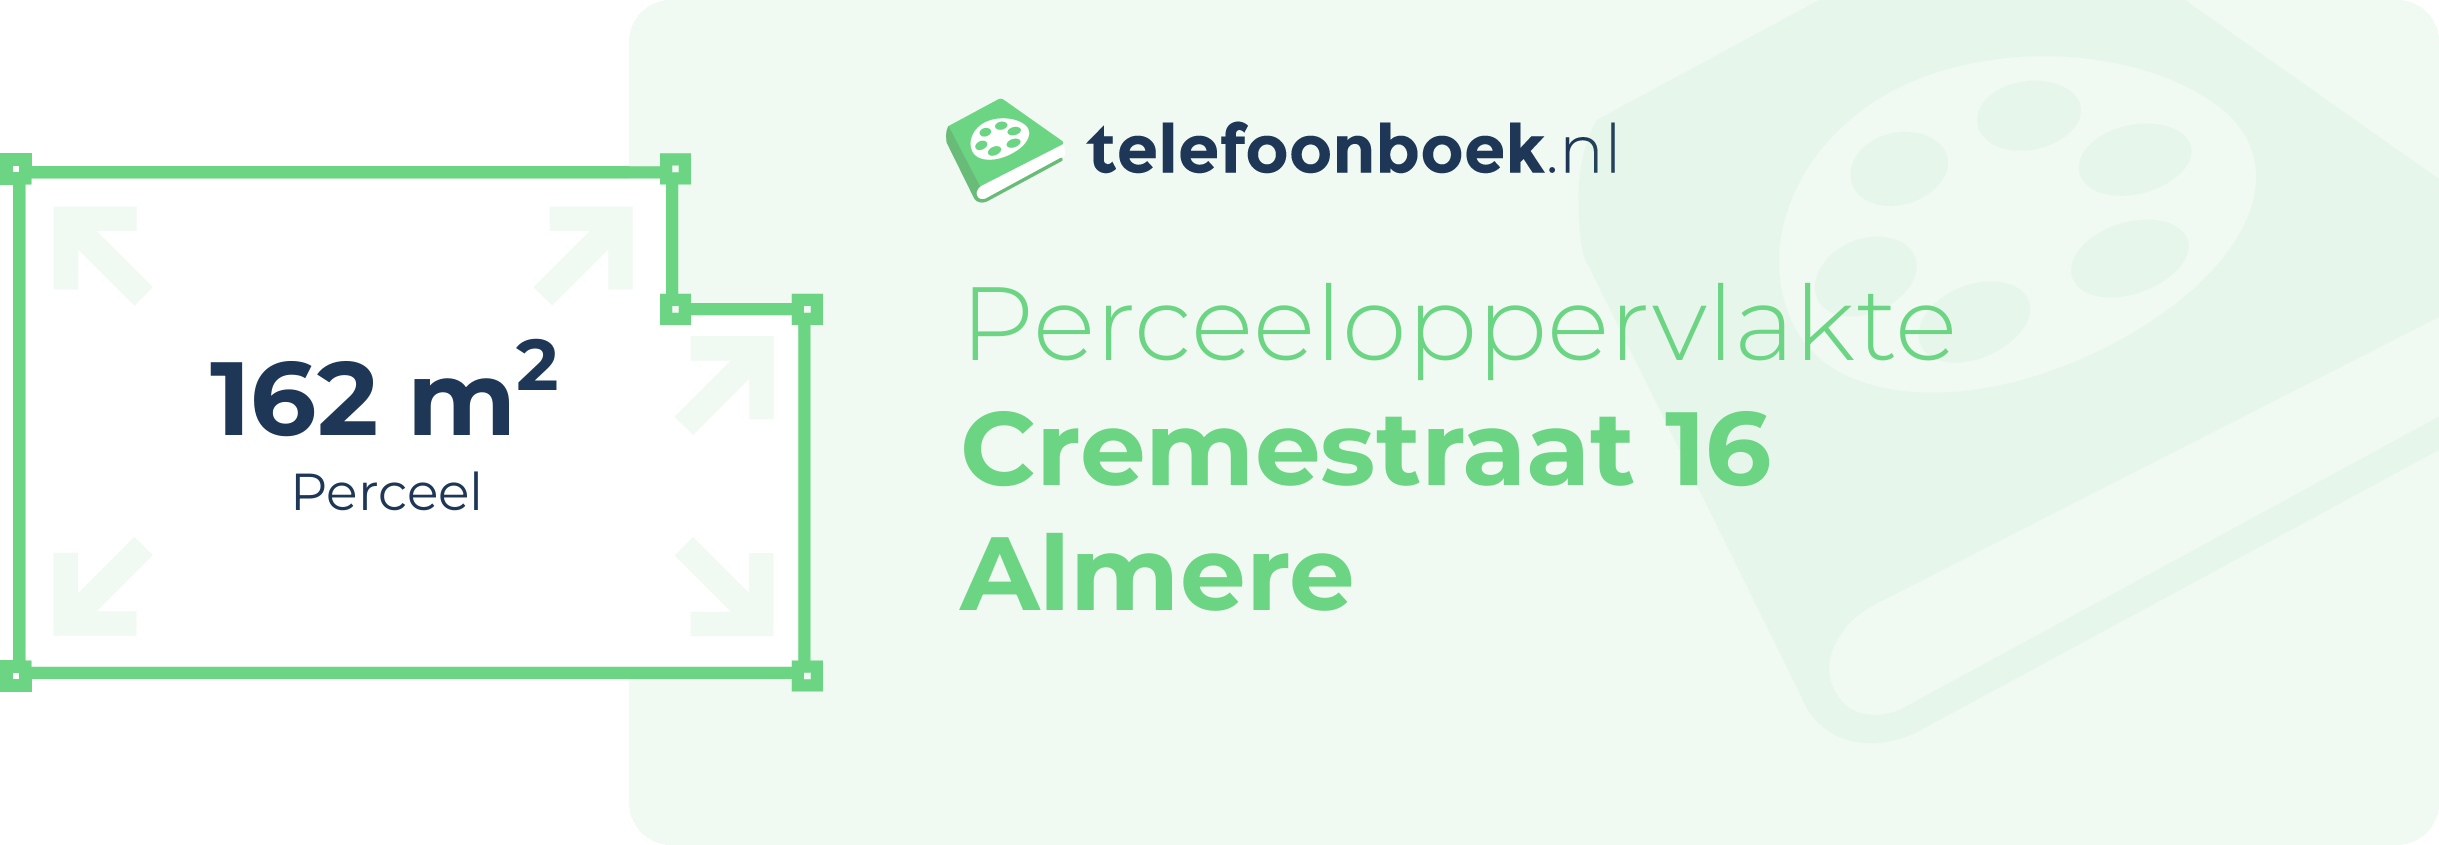 Perceeloppervlakte Cremestraat 16 Almere